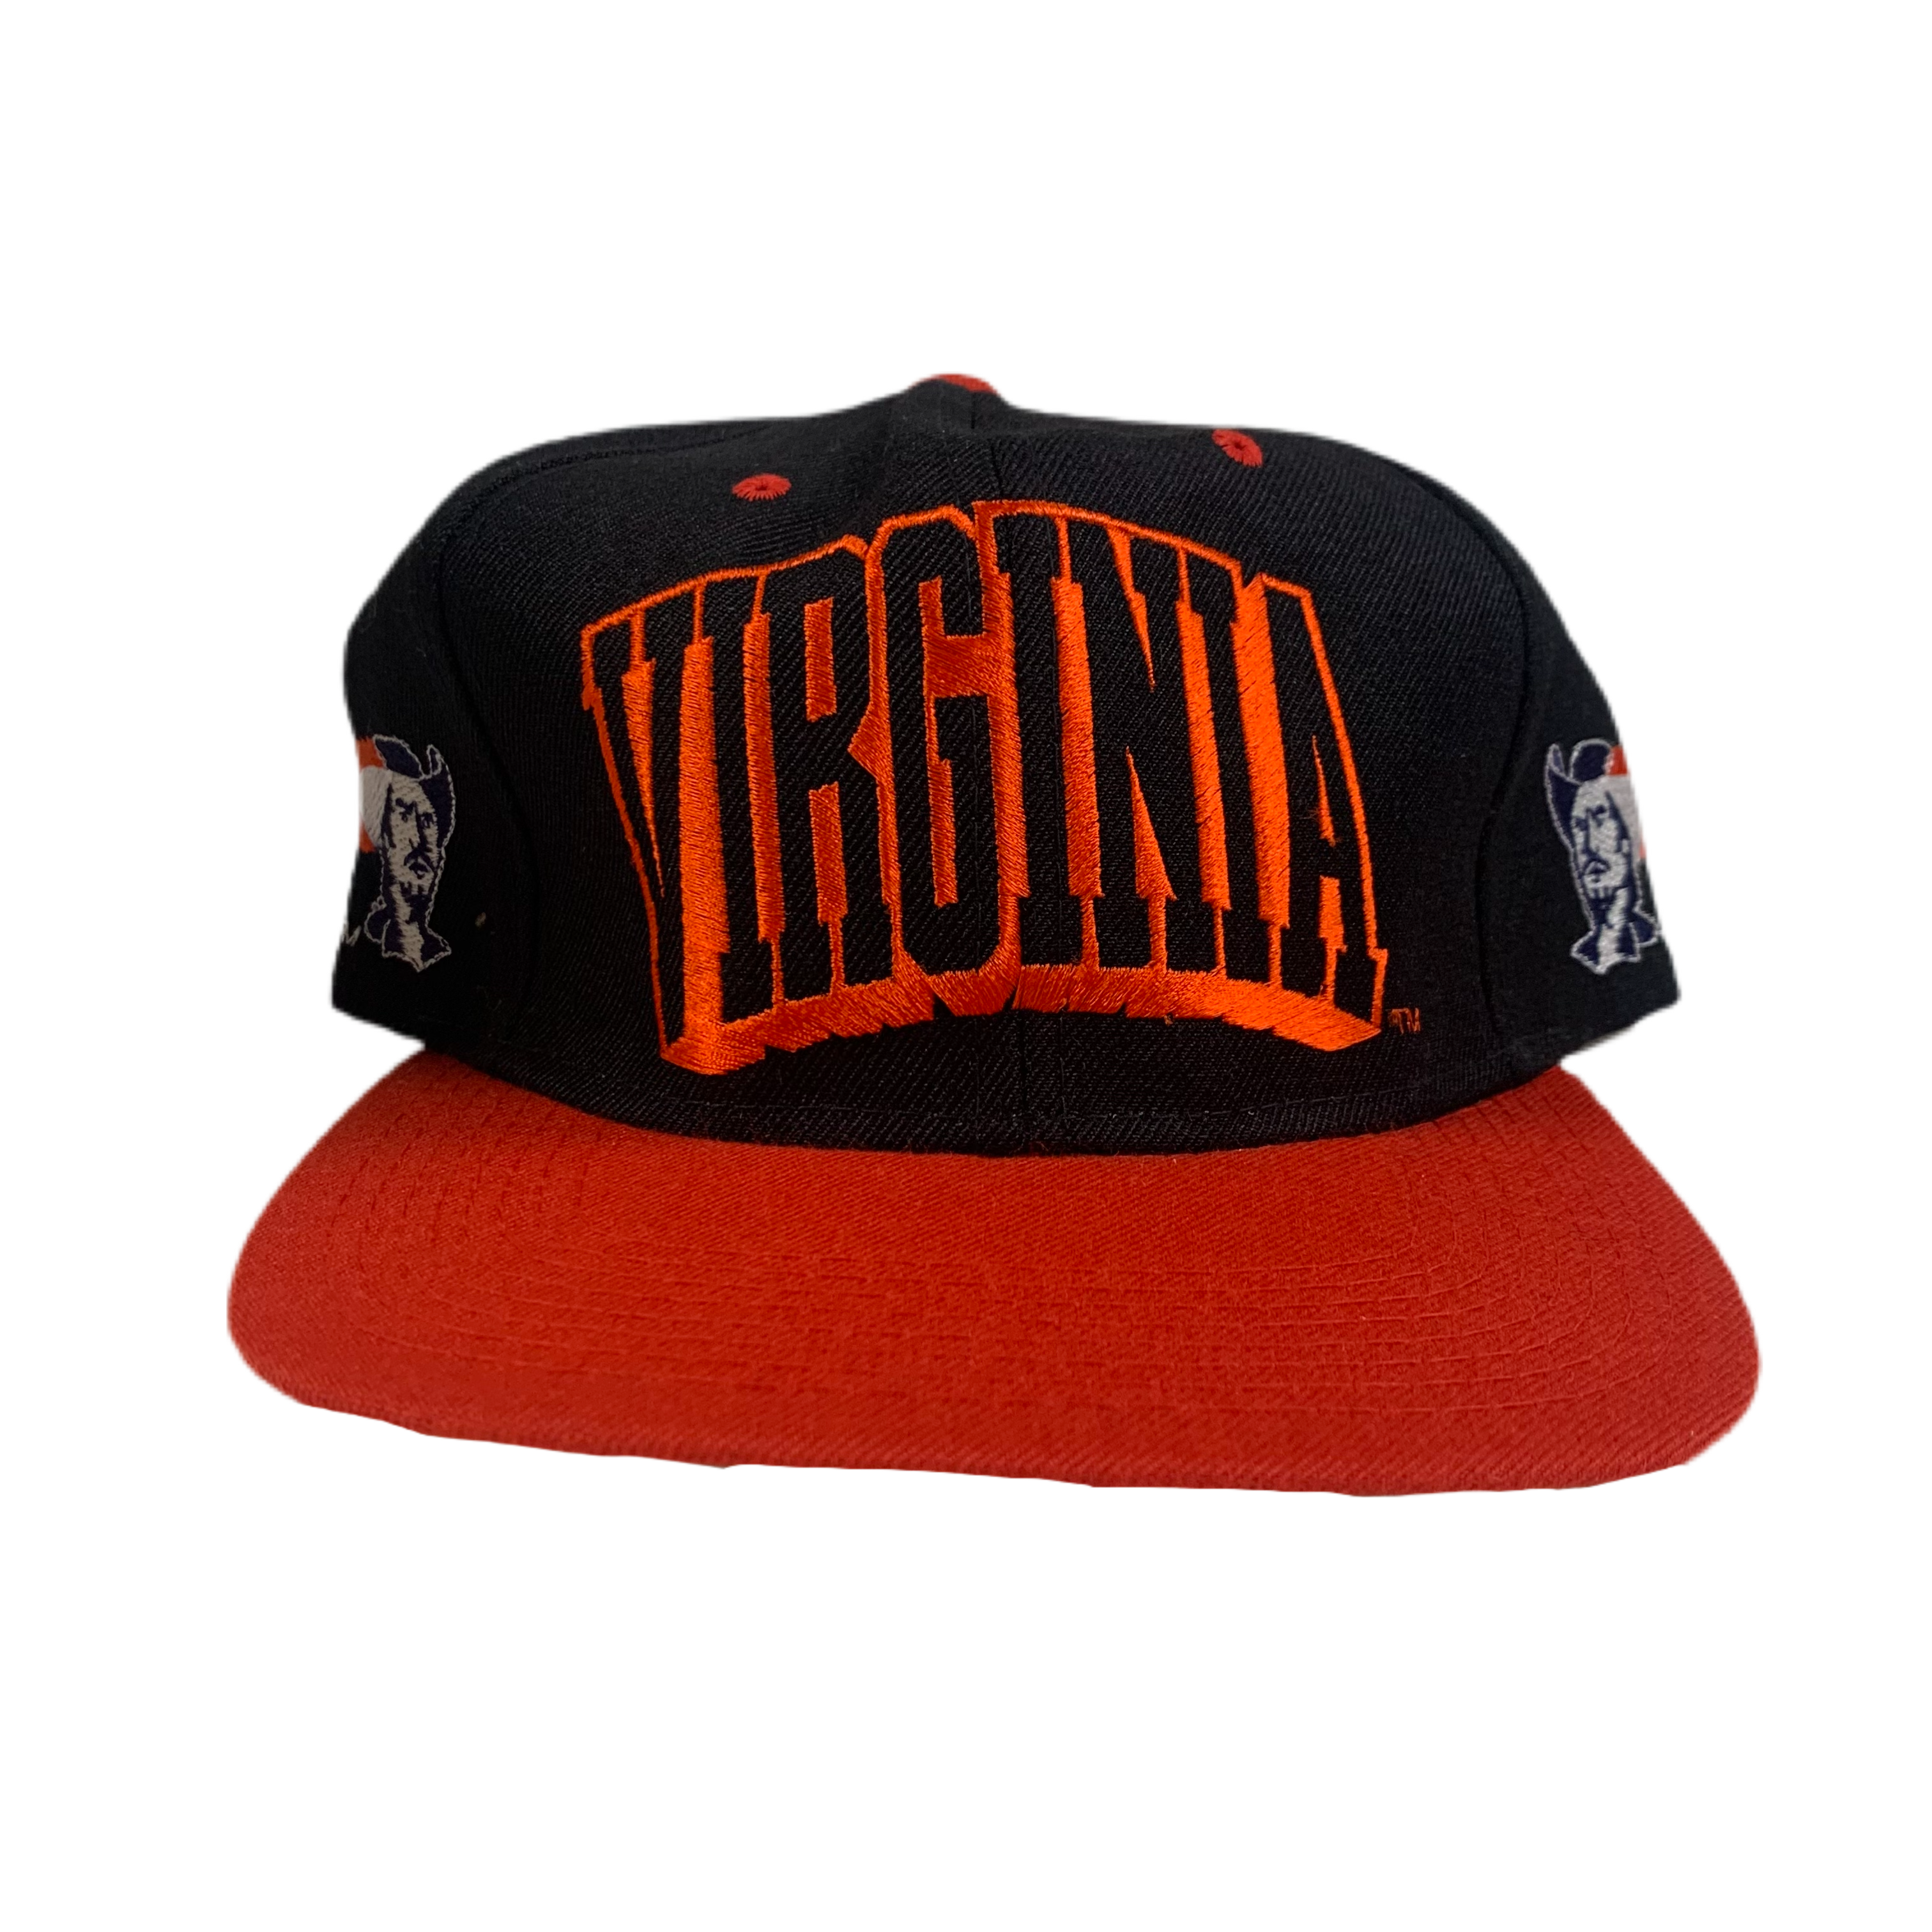 Vintage 90's University of Virginia UVA Sword Logo Blue Orange Snapback Hat